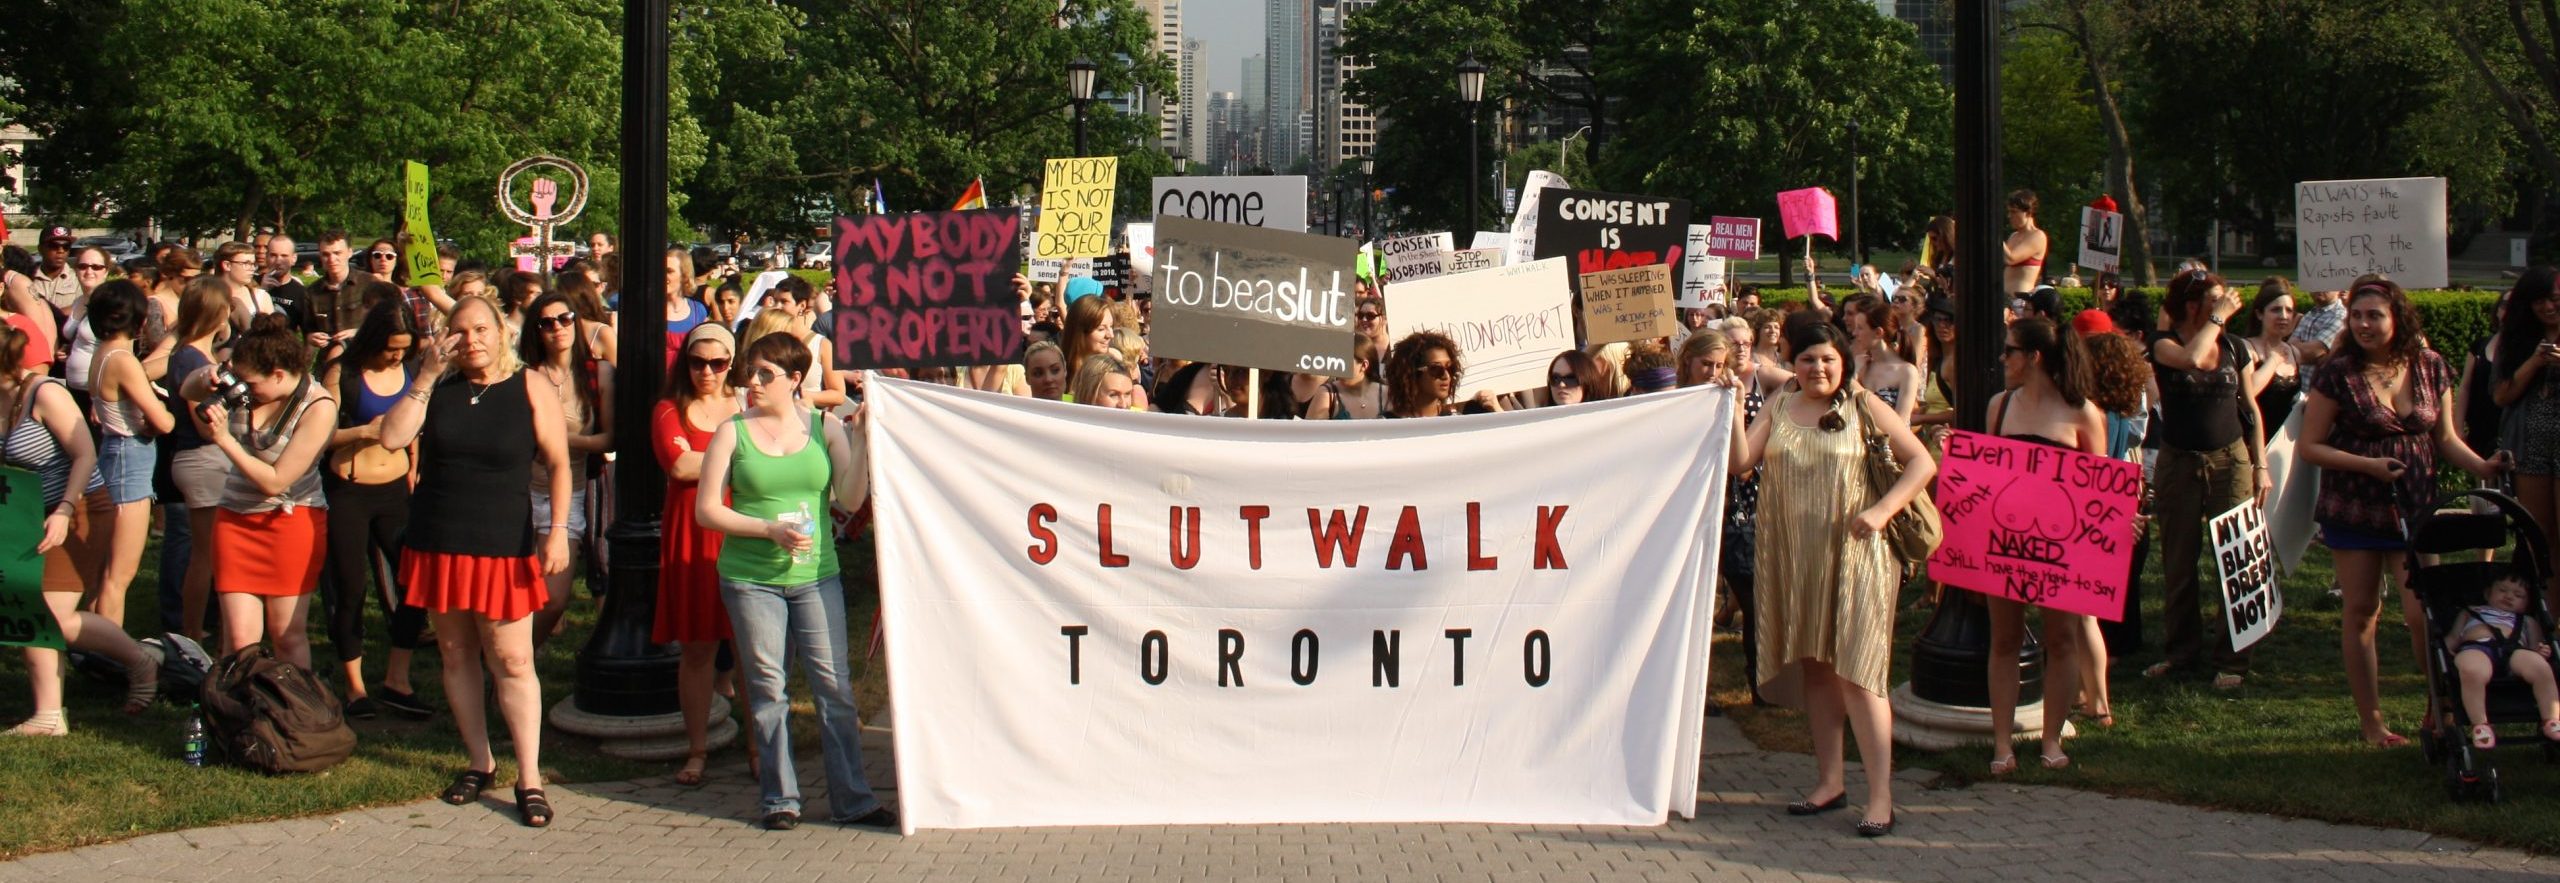 Large group holding a Slut walk Toronto banner